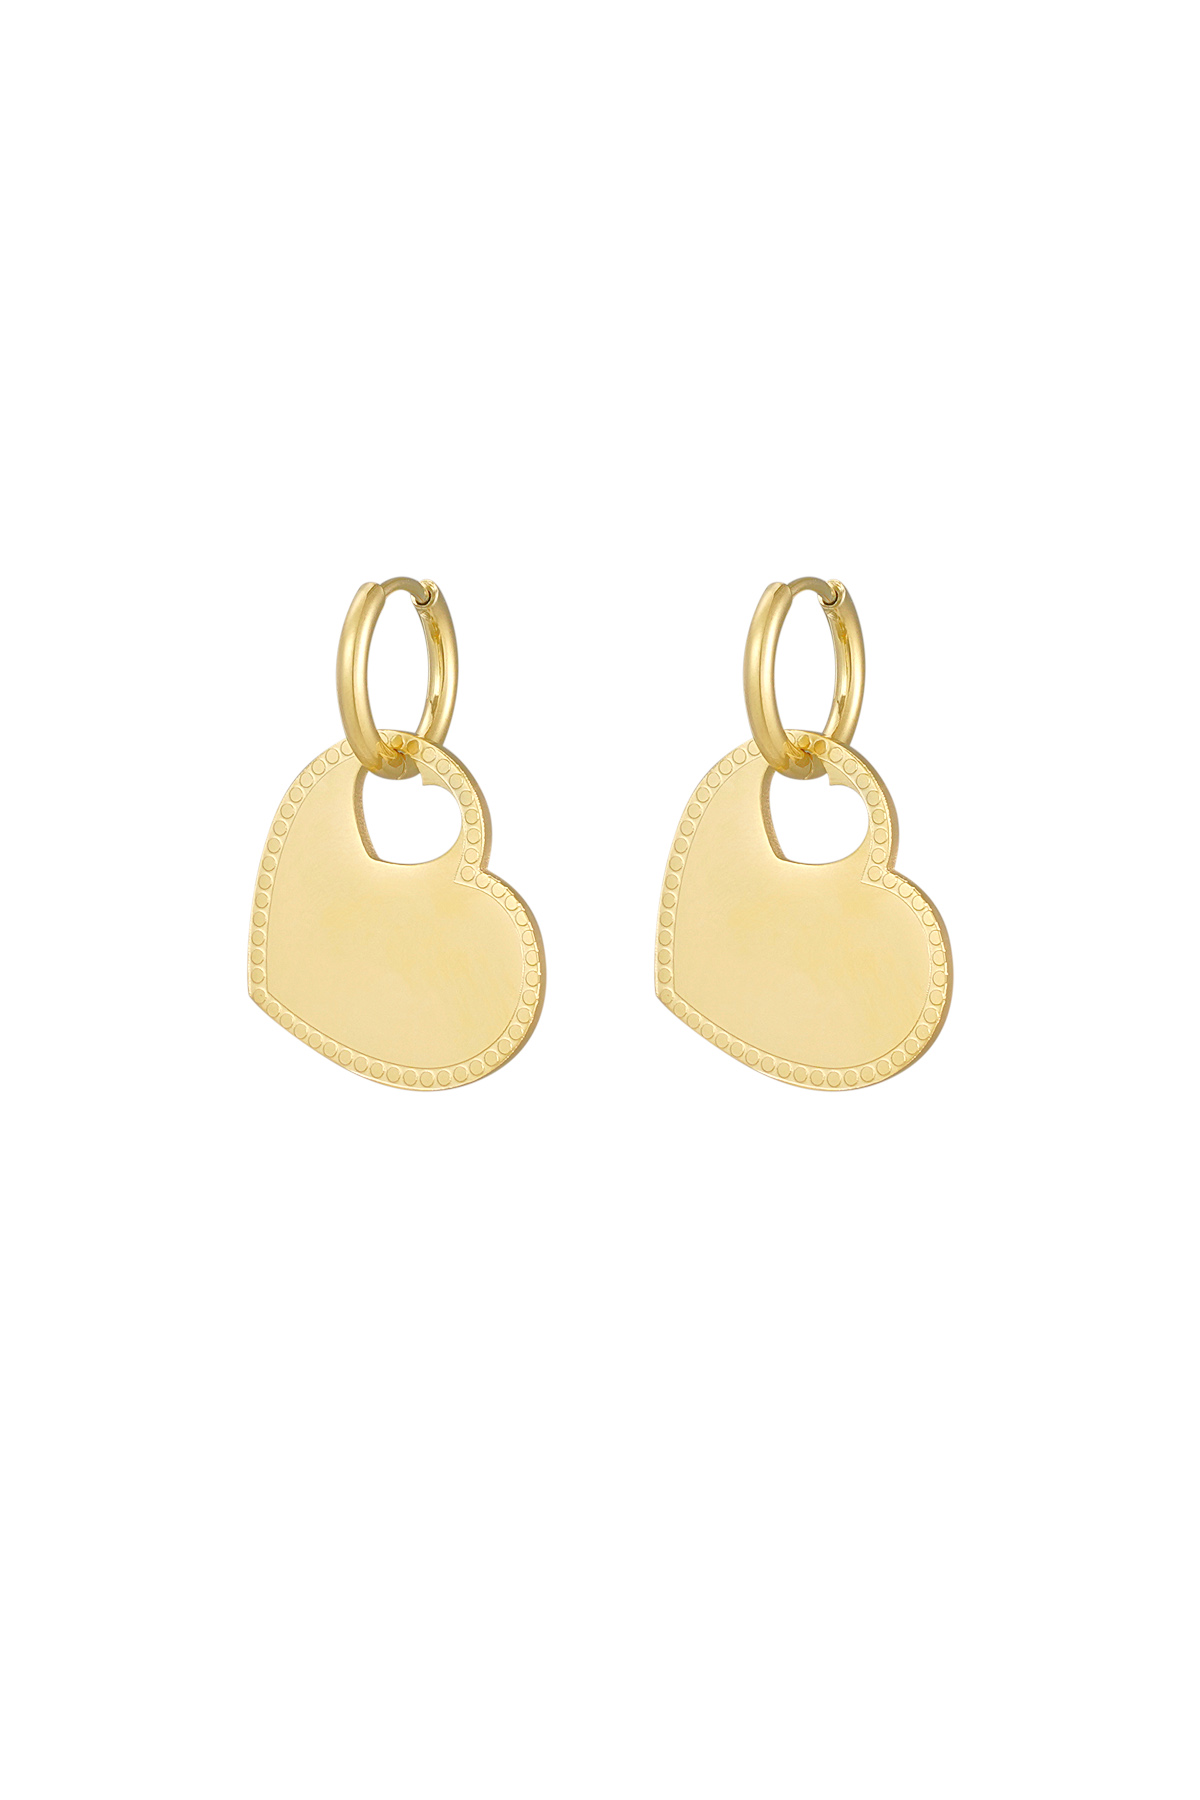 Earrings heart charm - gold h5 